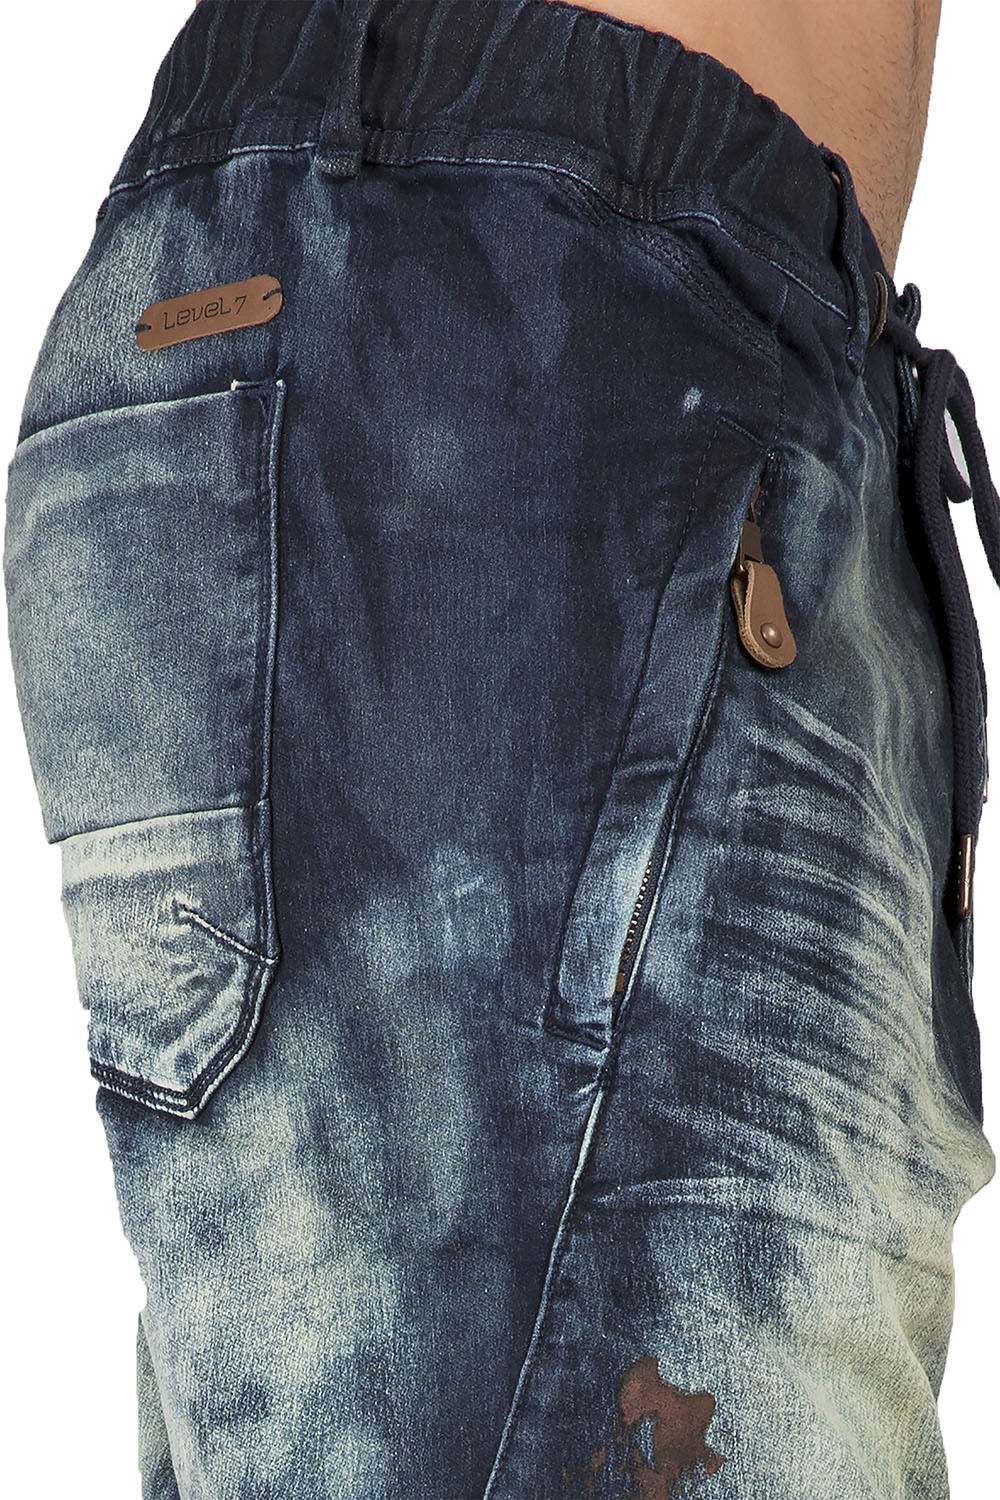 Drop Crotch Premium Indigo Knit Denim Jogger Jeans Twister Tainted Vintage